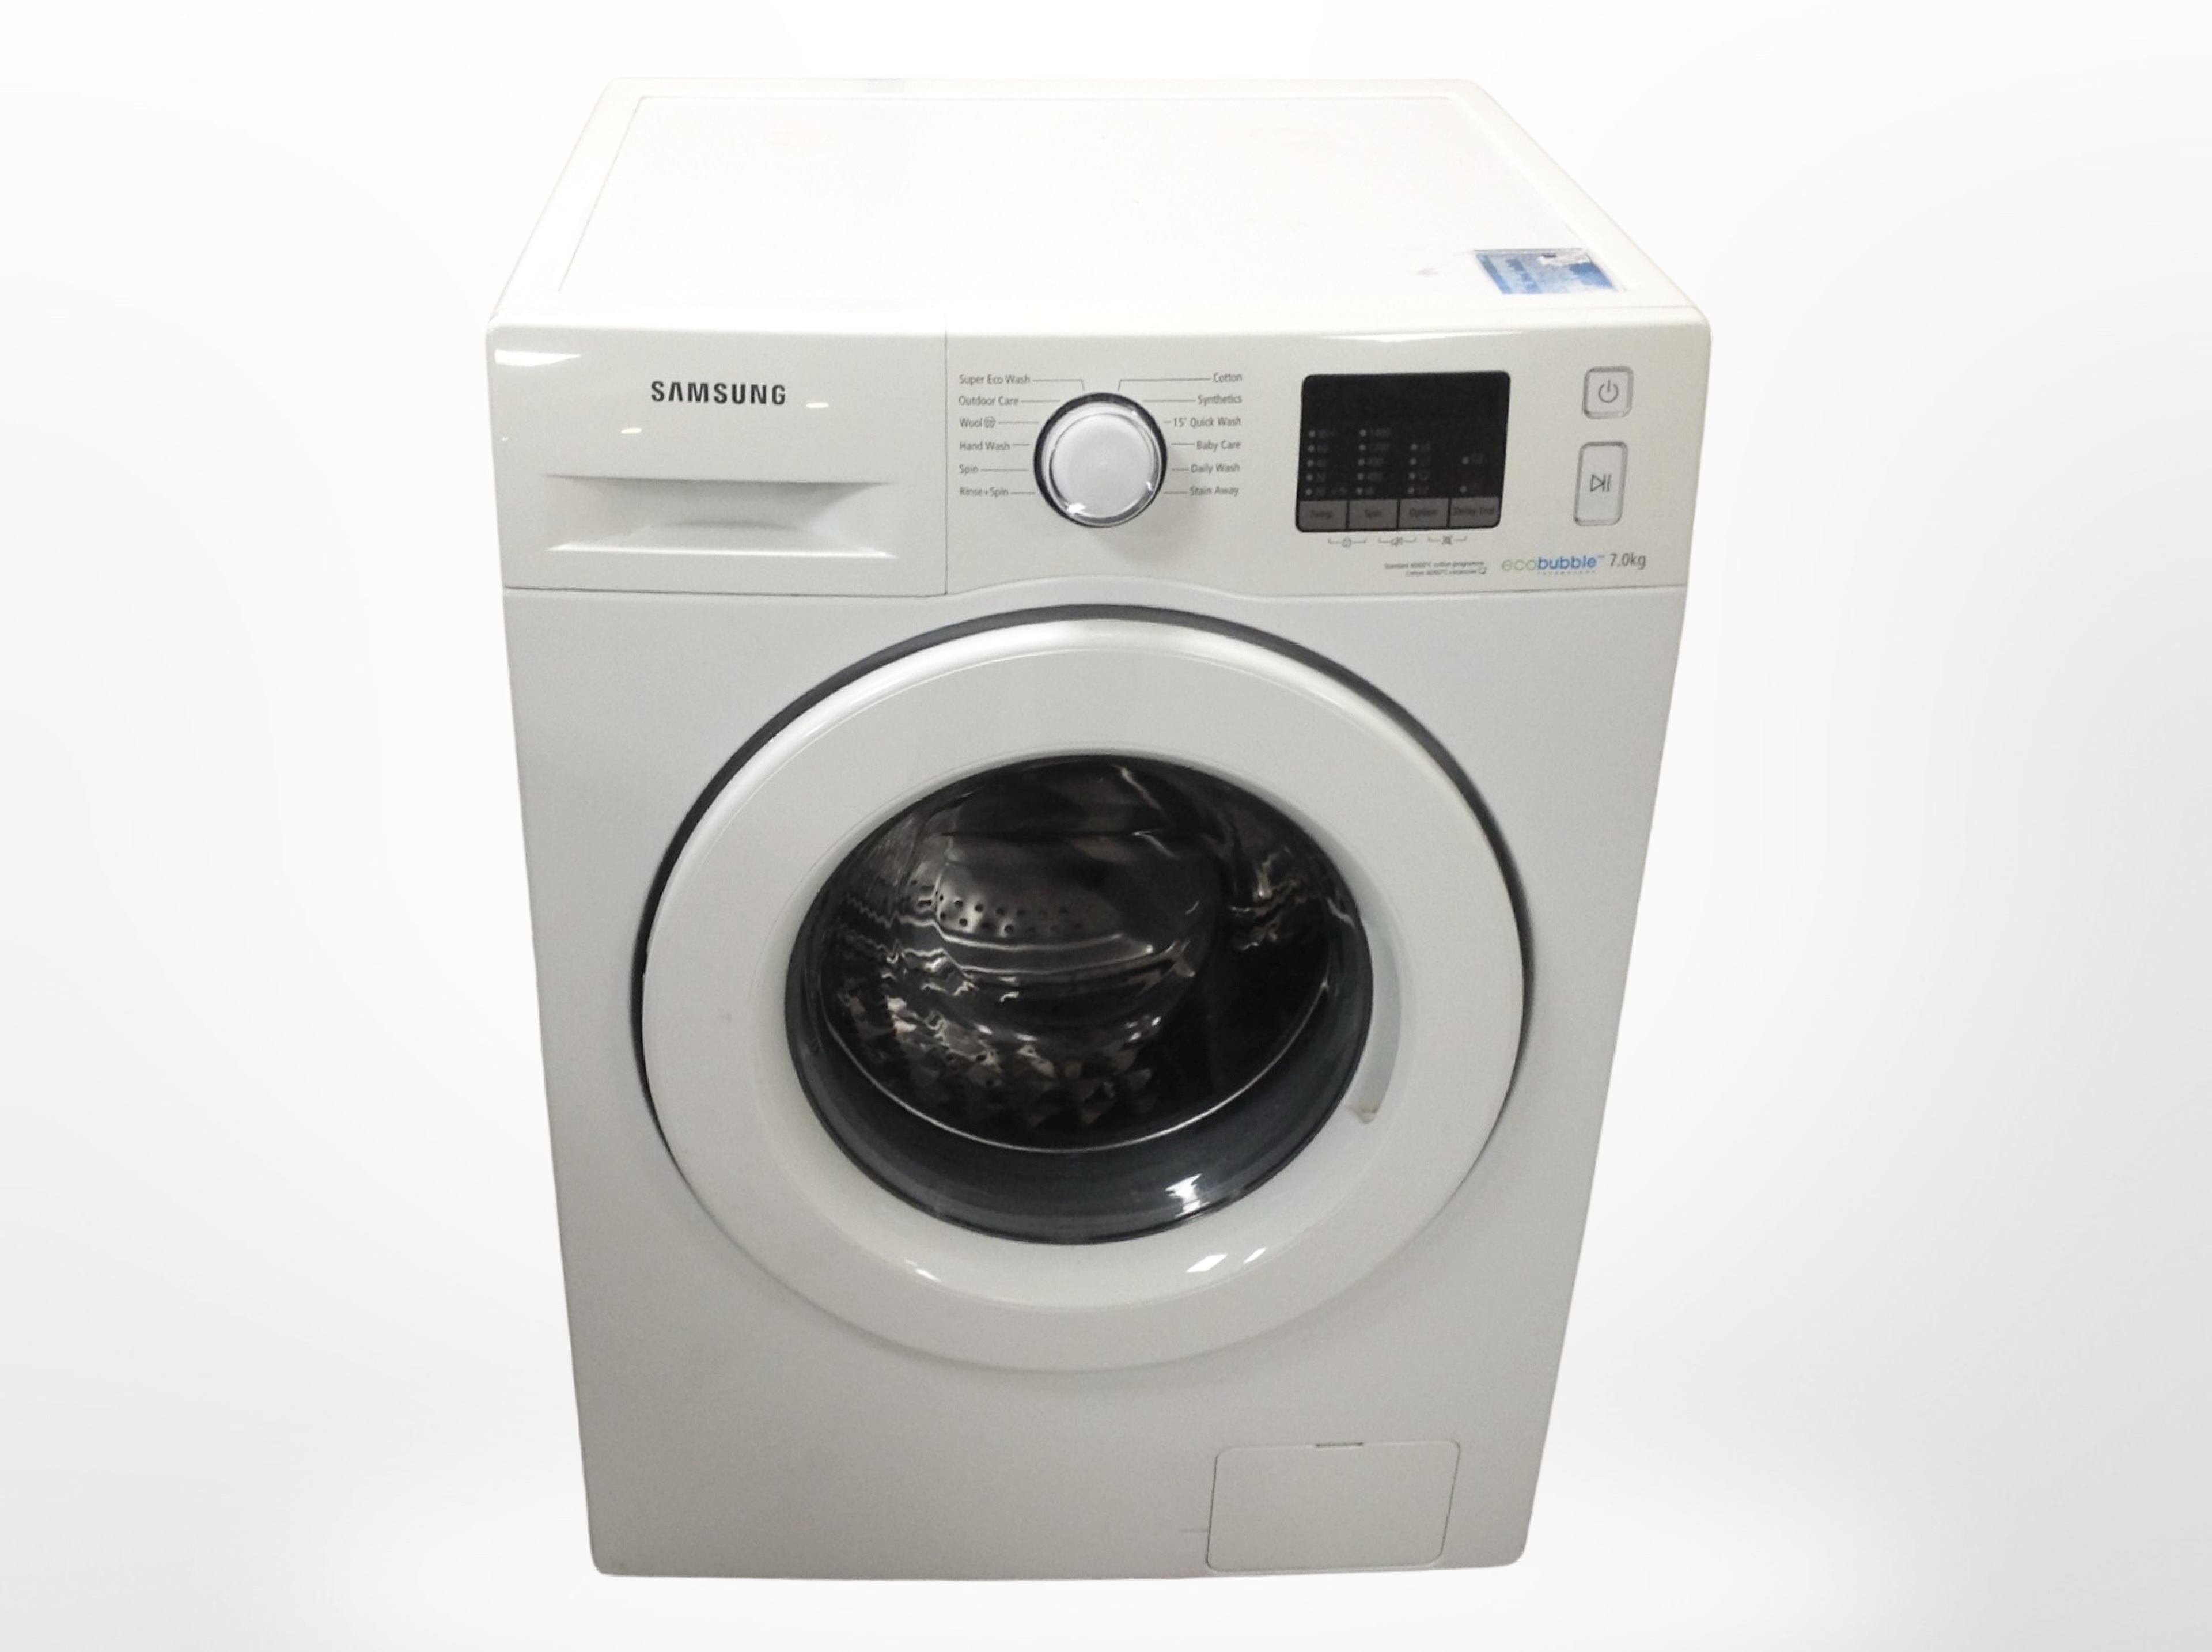 A Samsung Ecobubble 7kg washing machine.